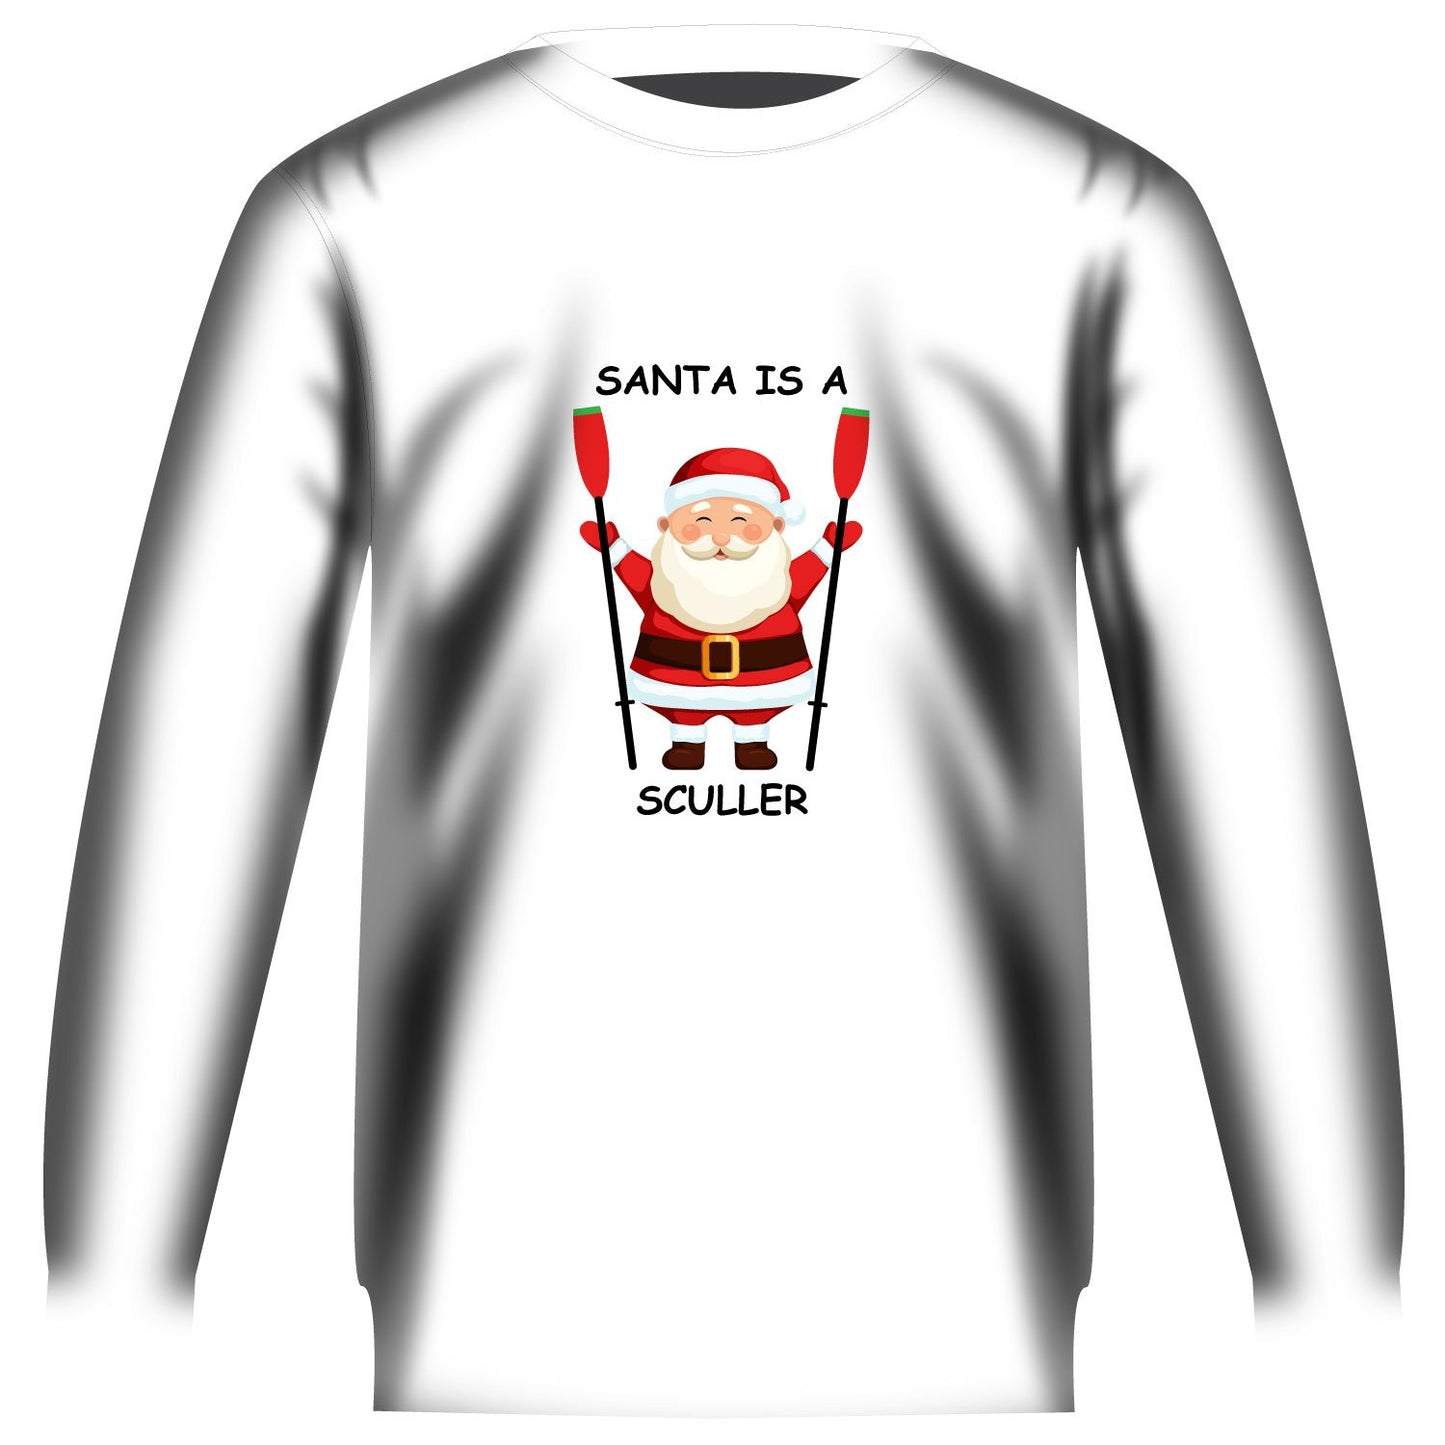 Stitch Rowing Santa Is a Sculler Sweatshirt